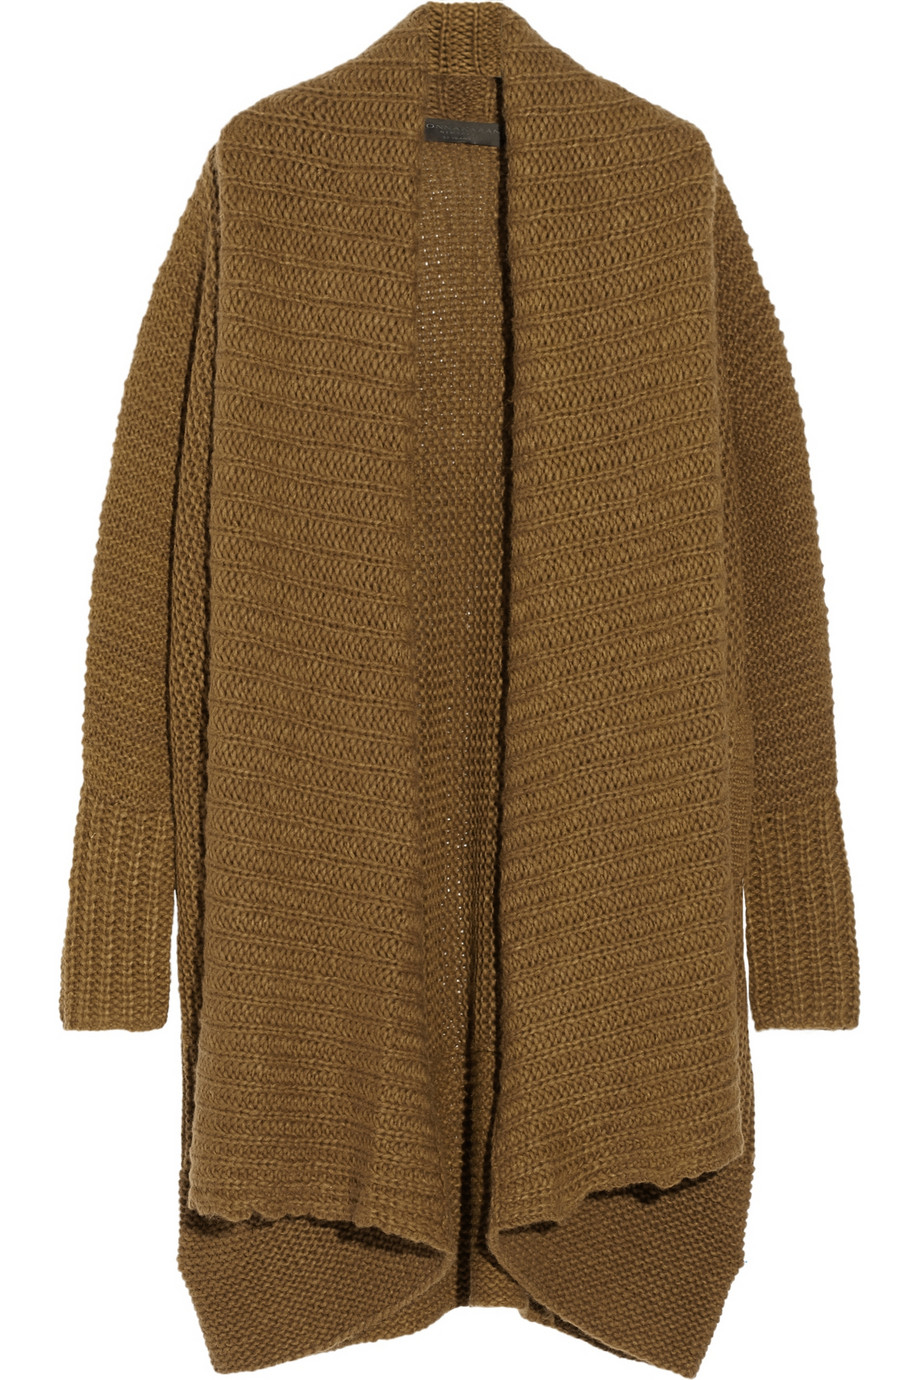 Lyst - Donna karan Oversized Alpaca Silk Cashmere and Woolblend ...